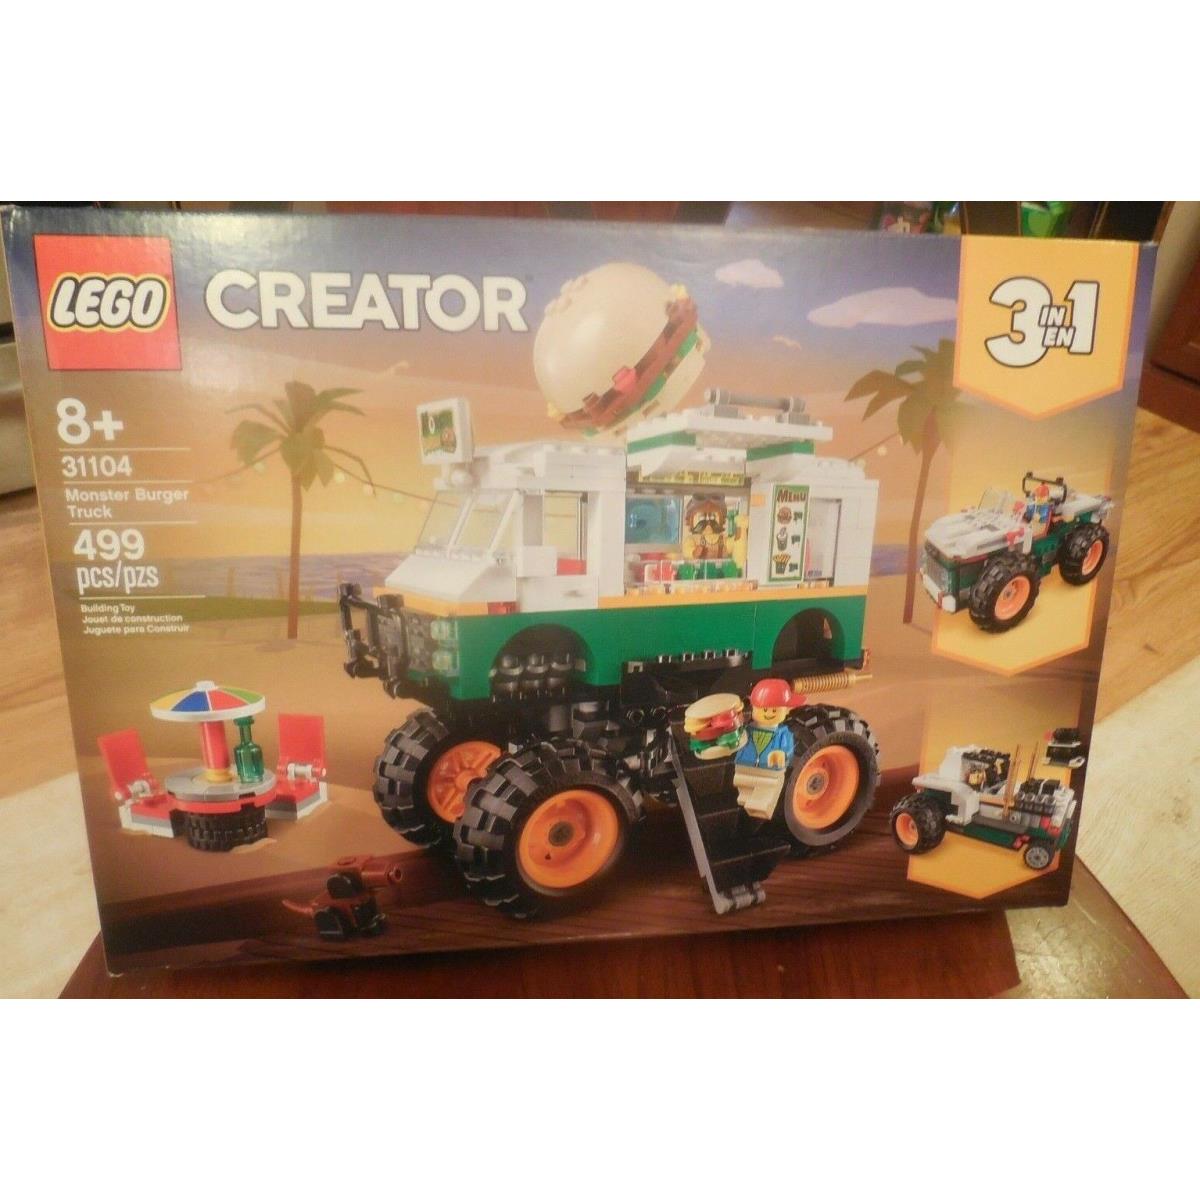 Lego 31104 Creator - Monster Burger Truck 499 Pcs